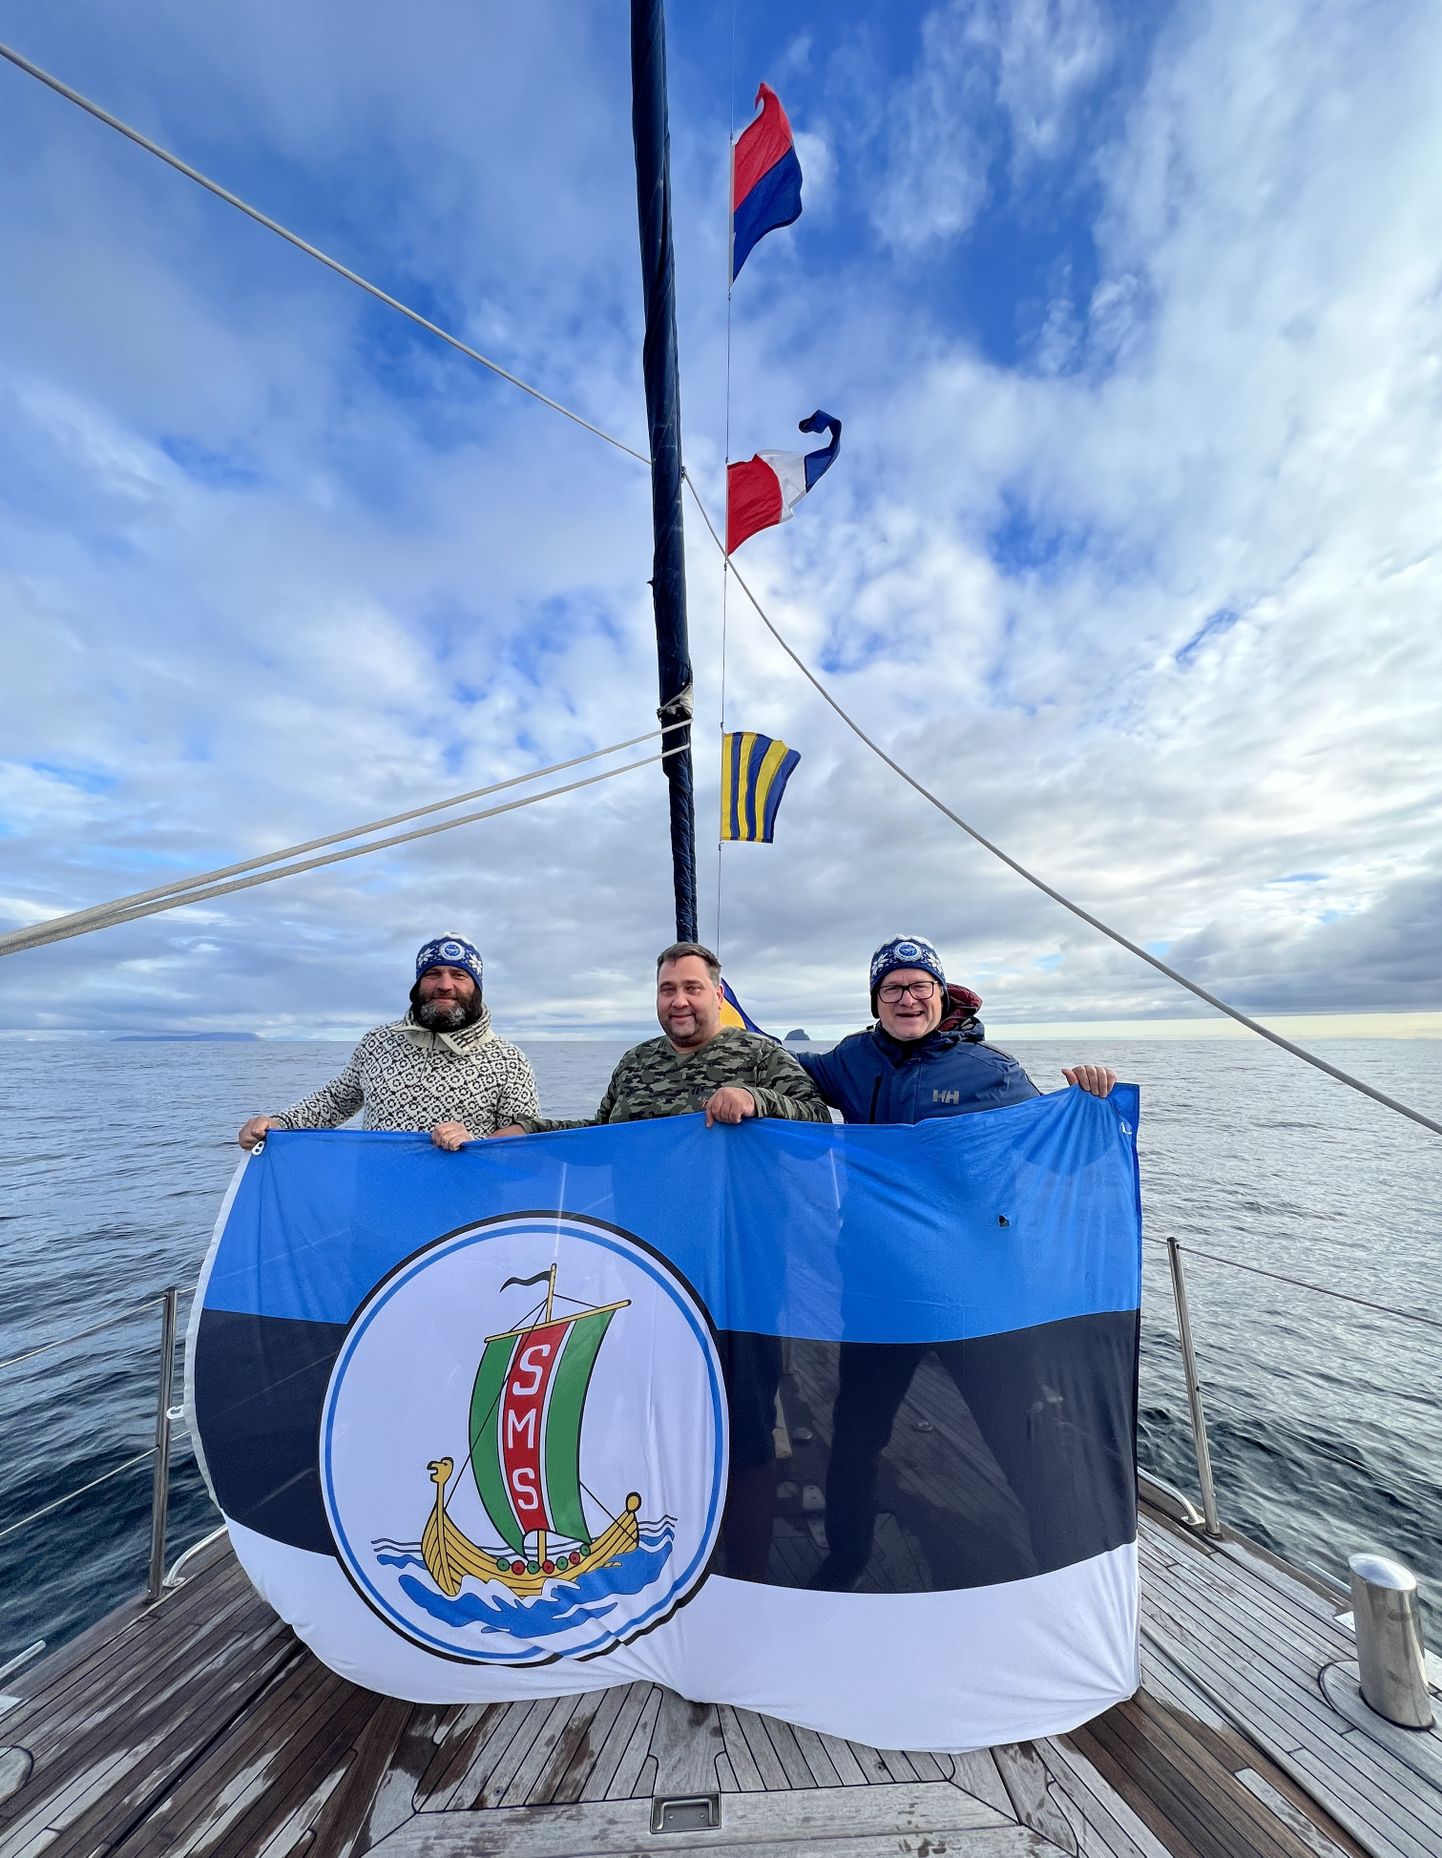 PRIIT KUUSK, MÄRTEN VAIKMAA JA TIIT PRUULI Saaremaa merispordi seltsi lipuga.